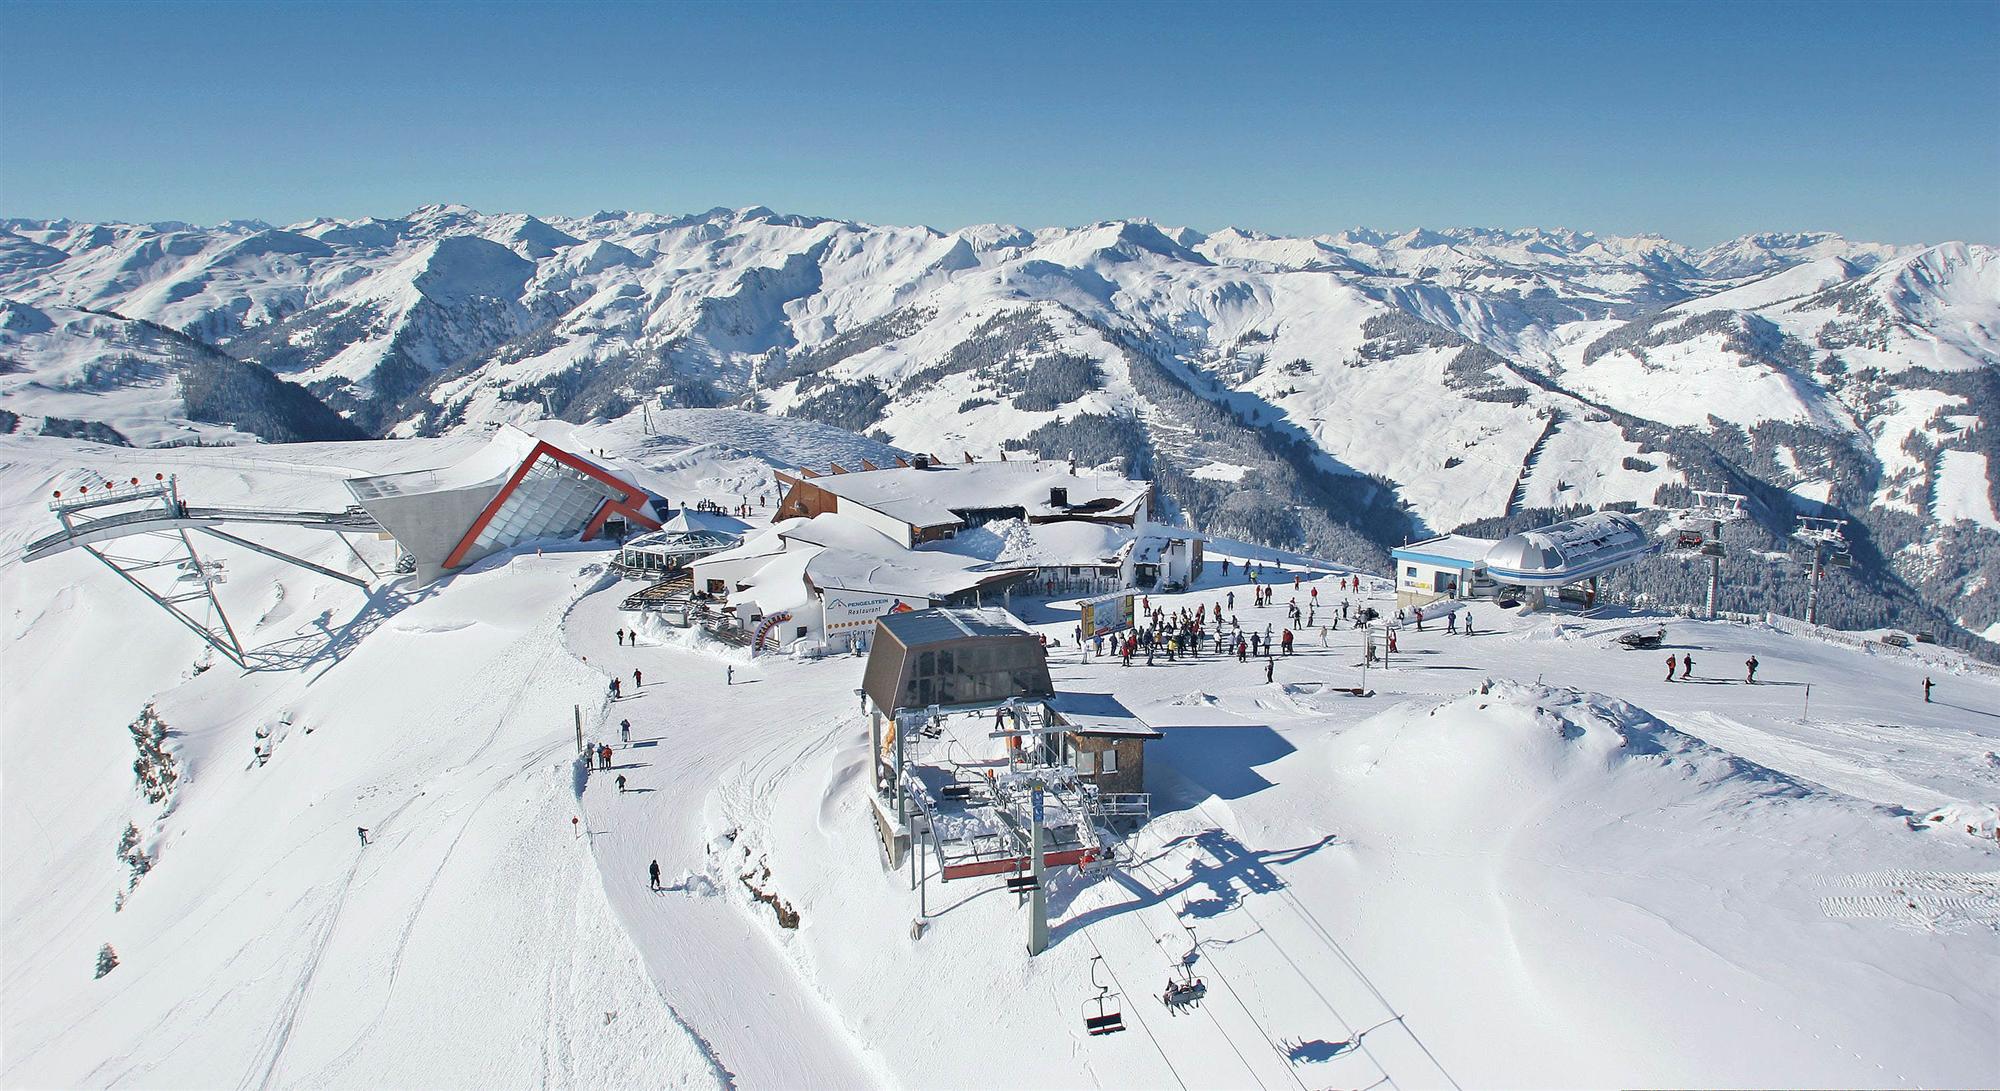 Ski resort at Kitzbuehel Austria wallpapers and images   wallpapers